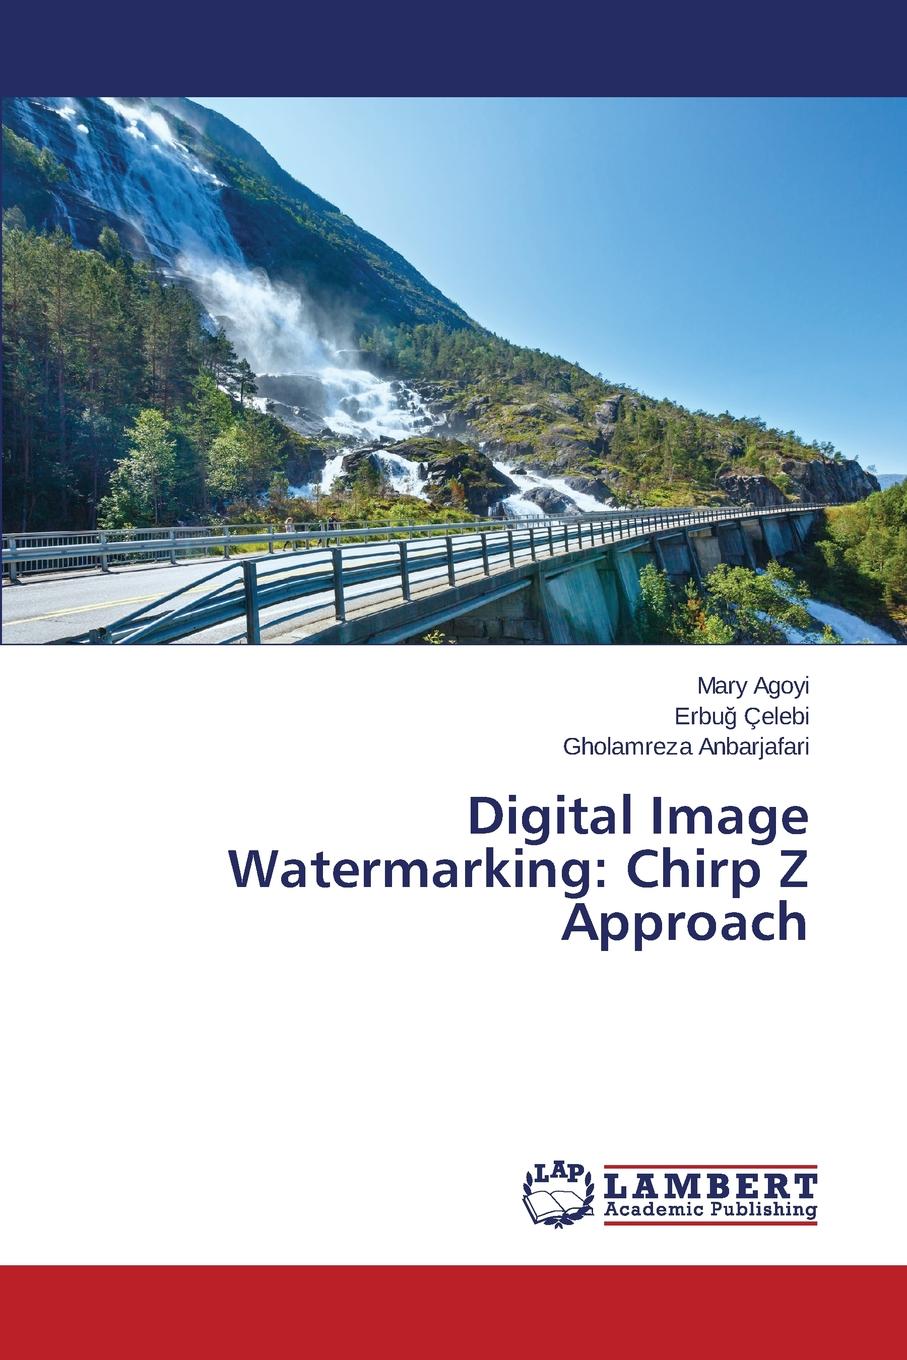 Digital Image Watermarking. Chirp Z Approach